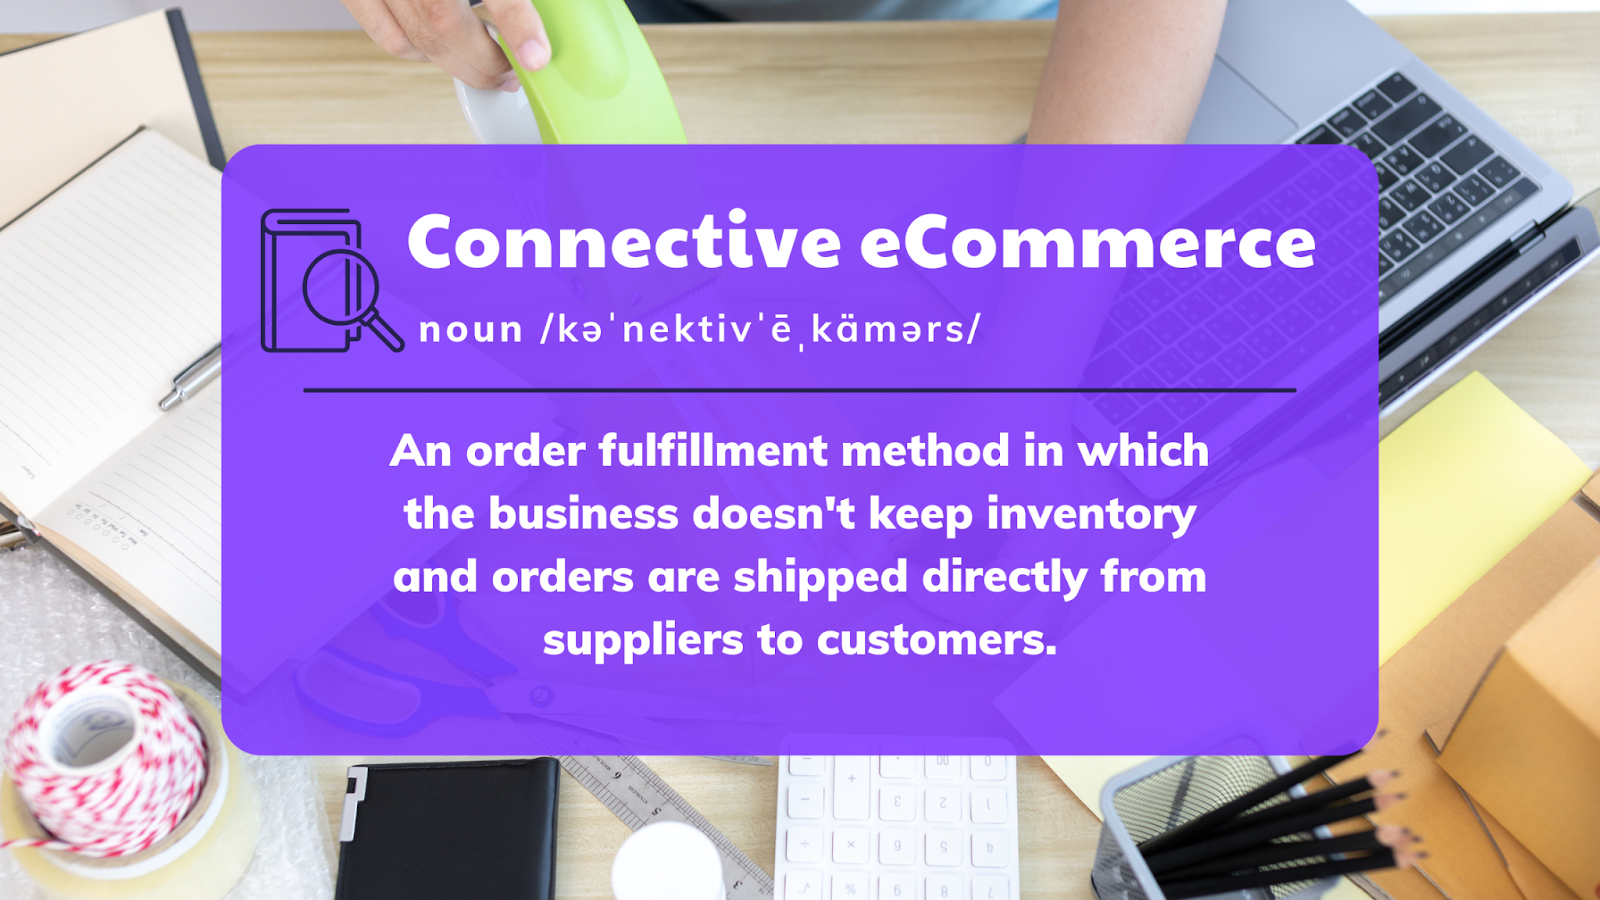 Connective eCommerce definition